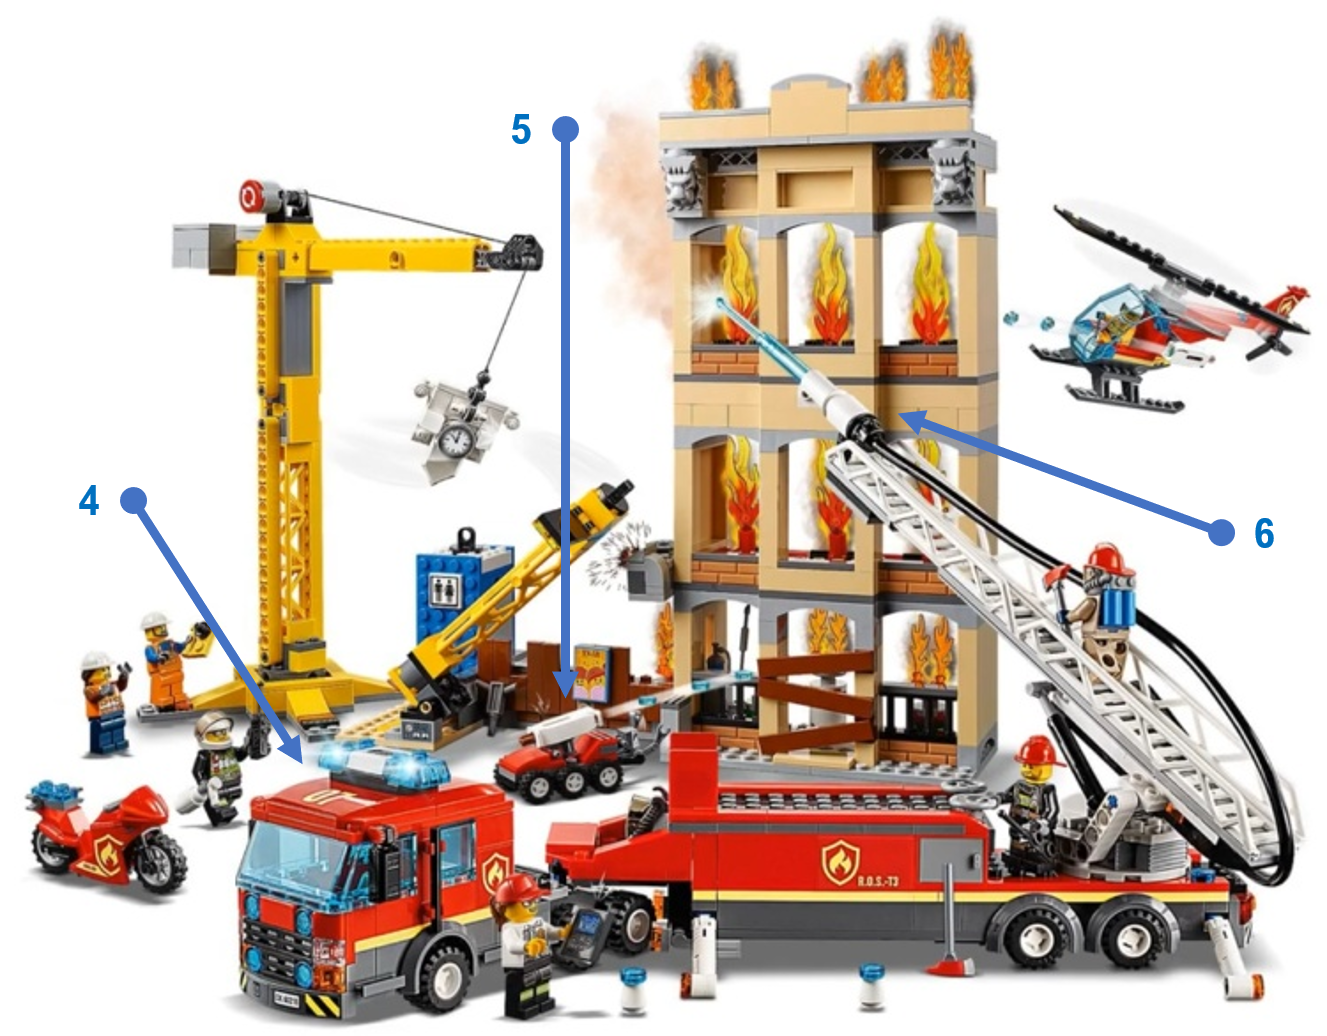 New Parts For 19 Brickset Lego Set Guide And Database